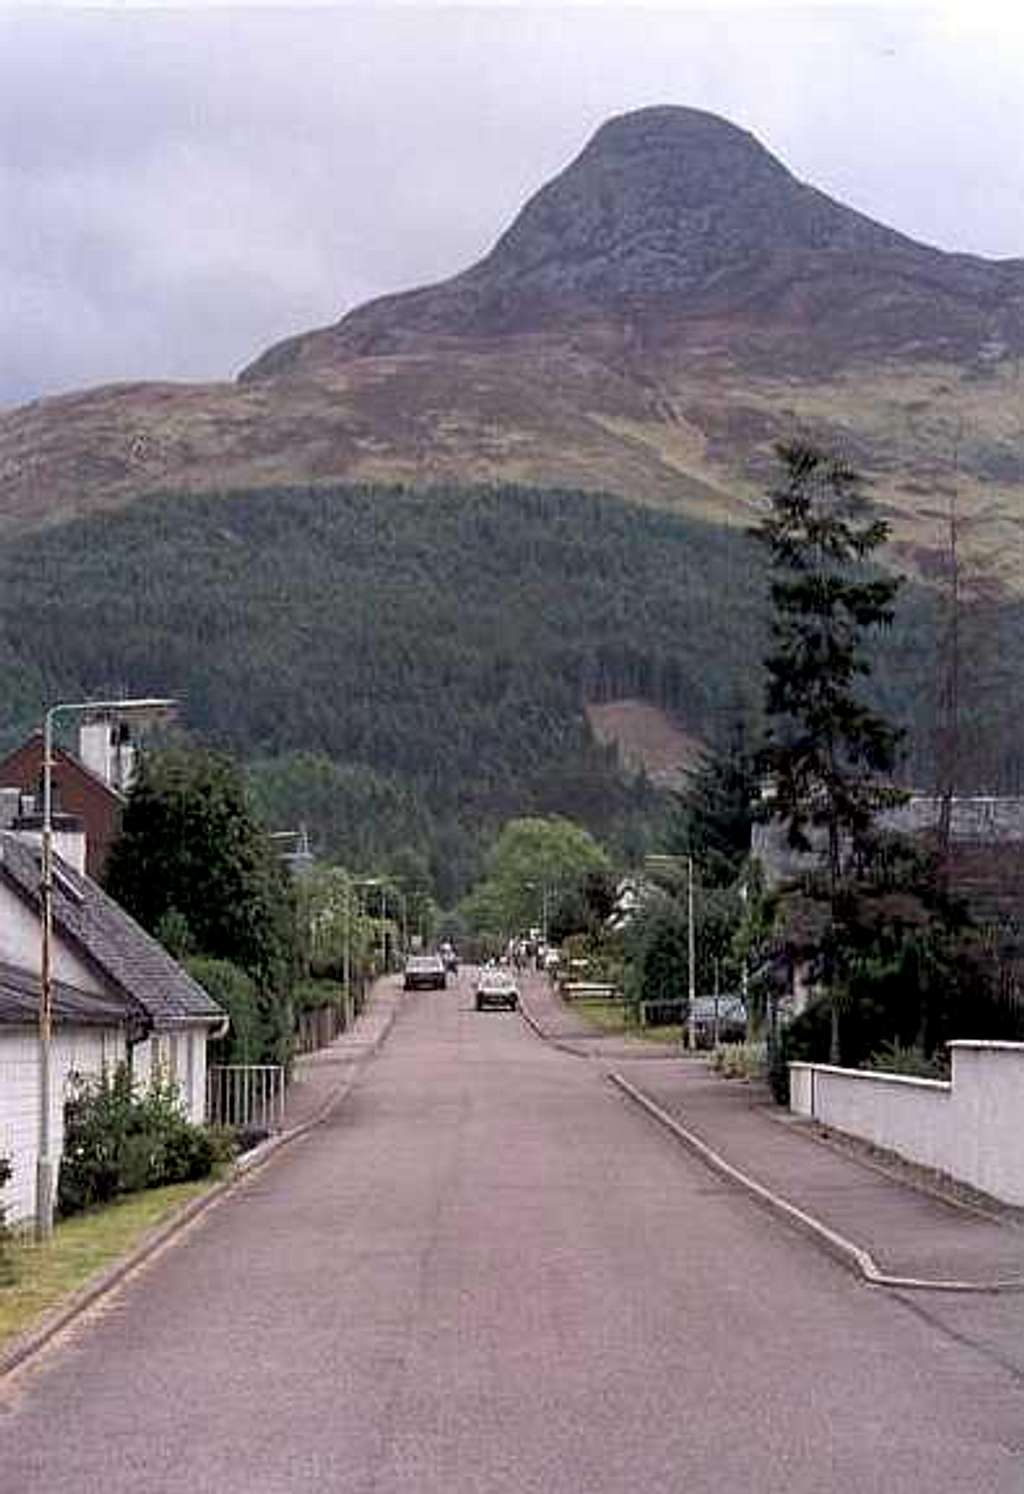 Glencoe village, looking to the Pap of Glencoe